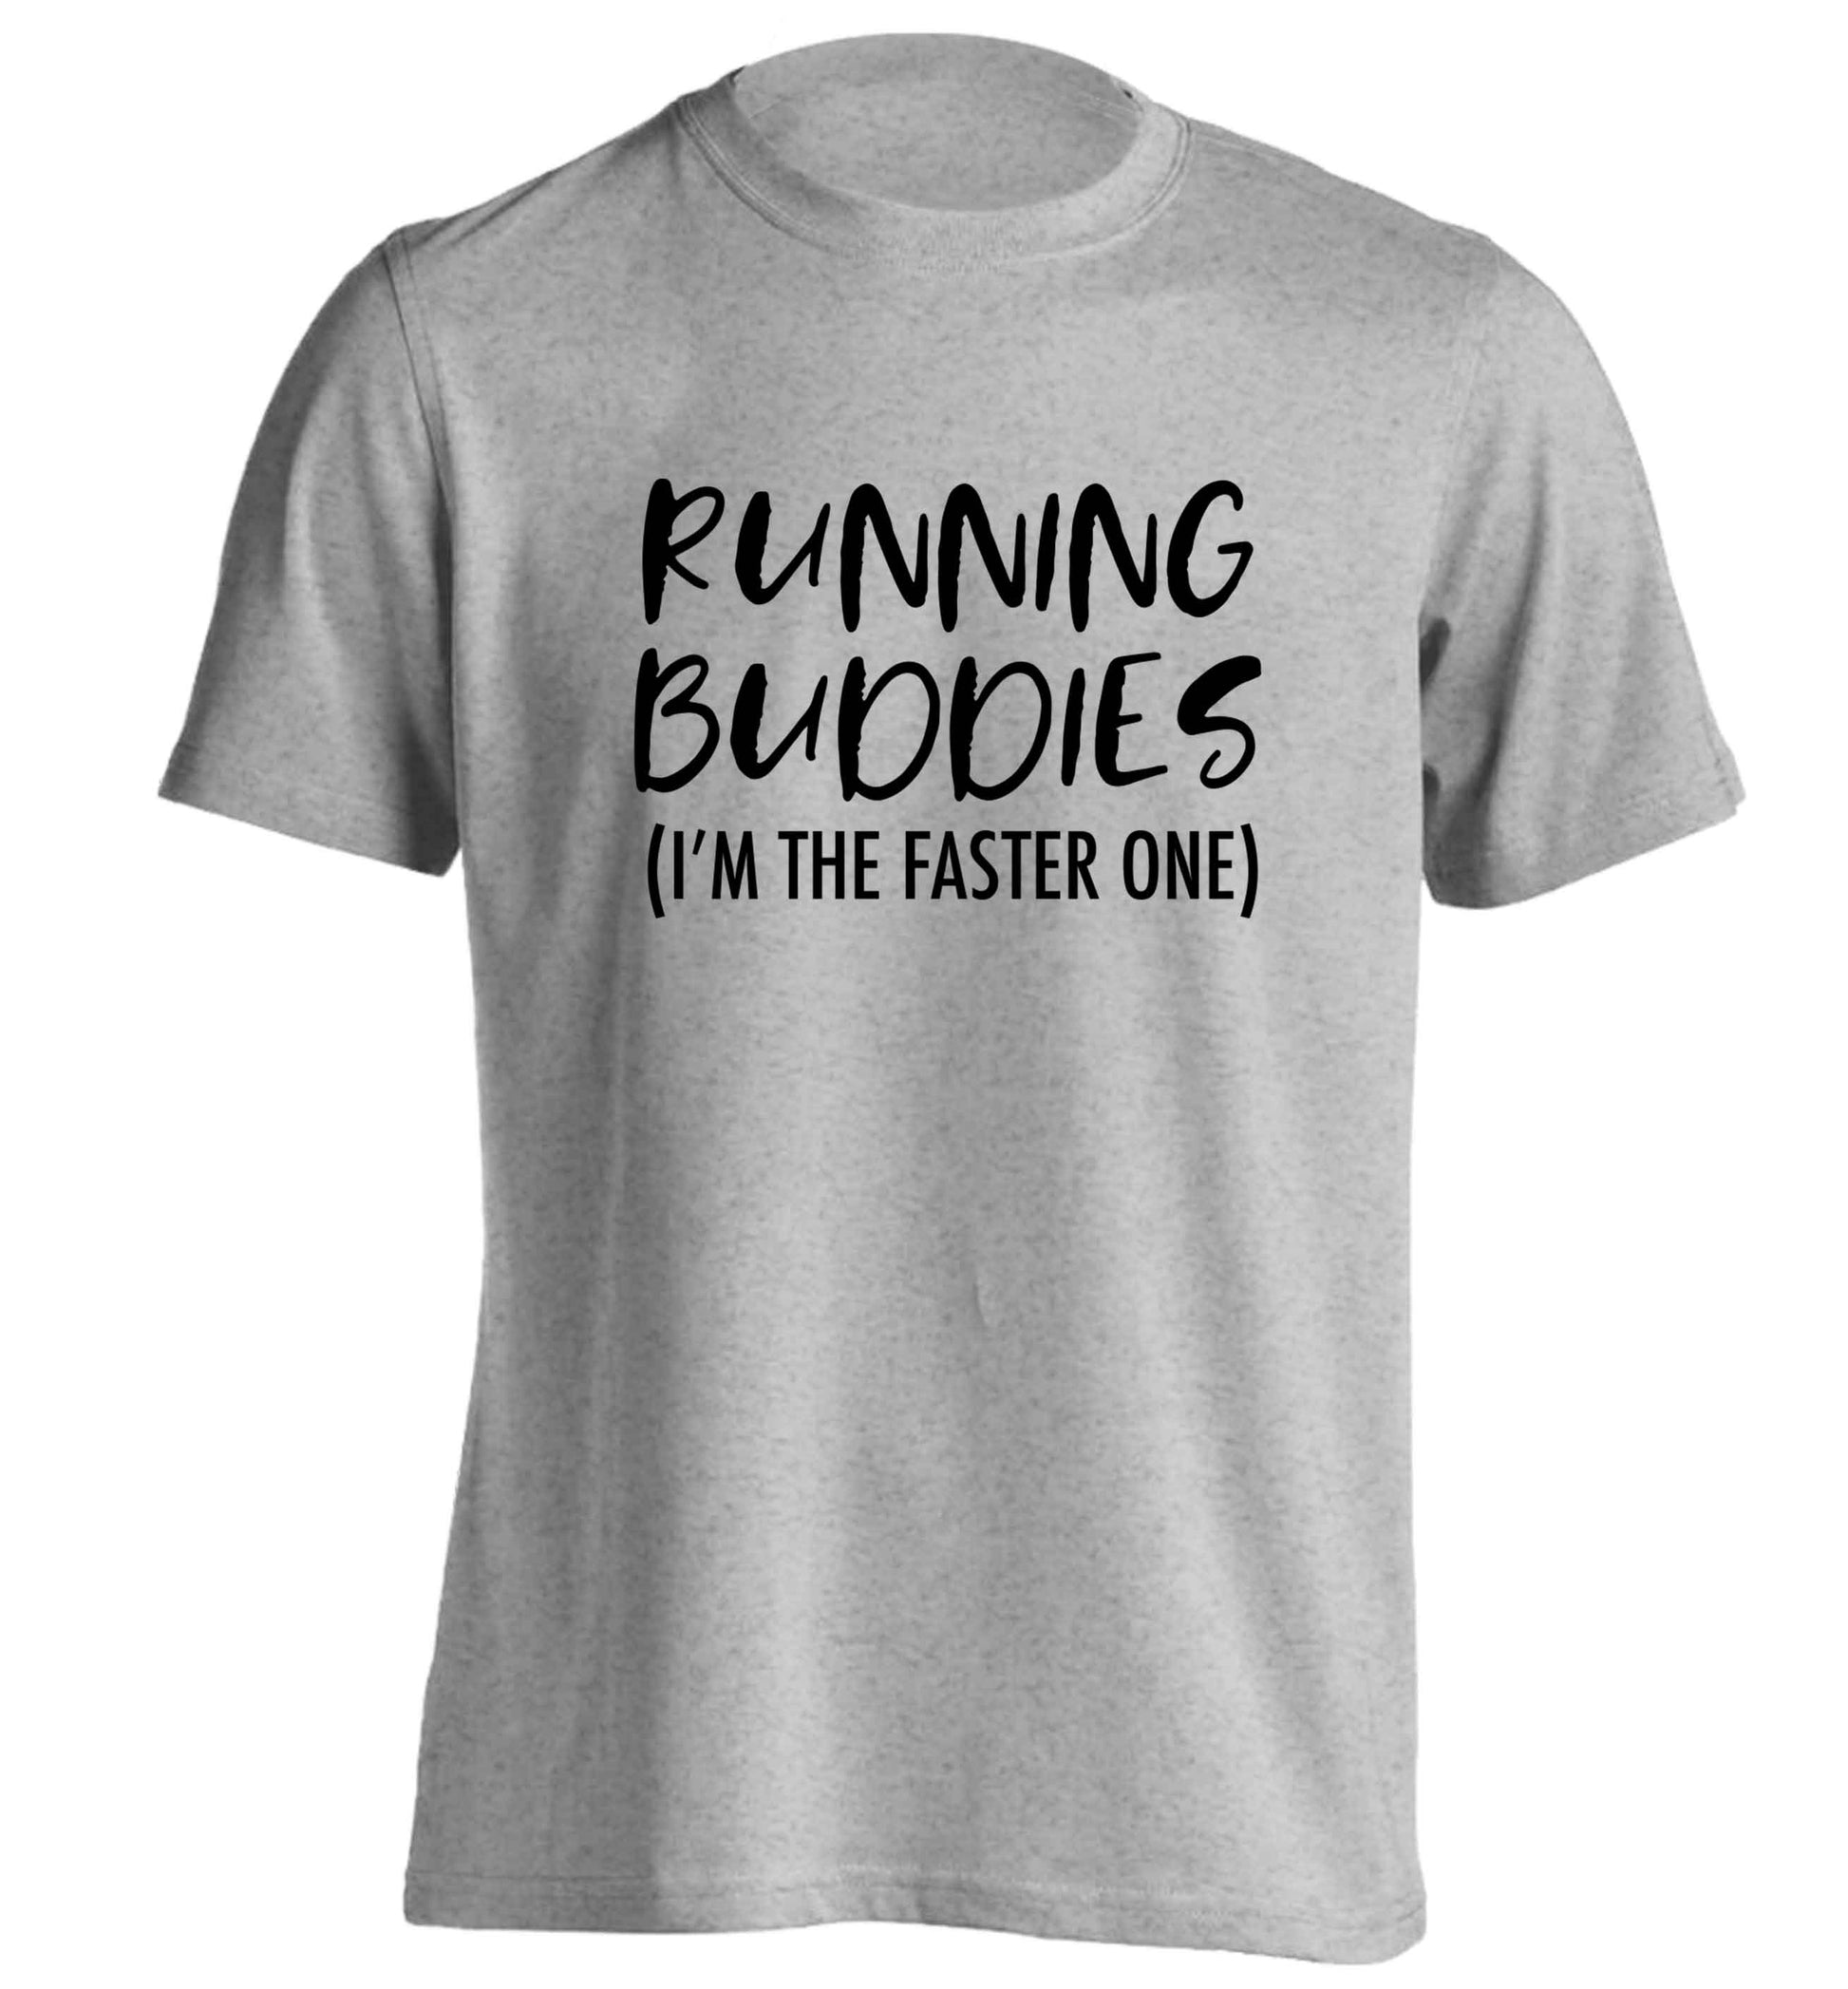 Running buddies (I'm the faster one) adults unisex grey Tshirt 2XL